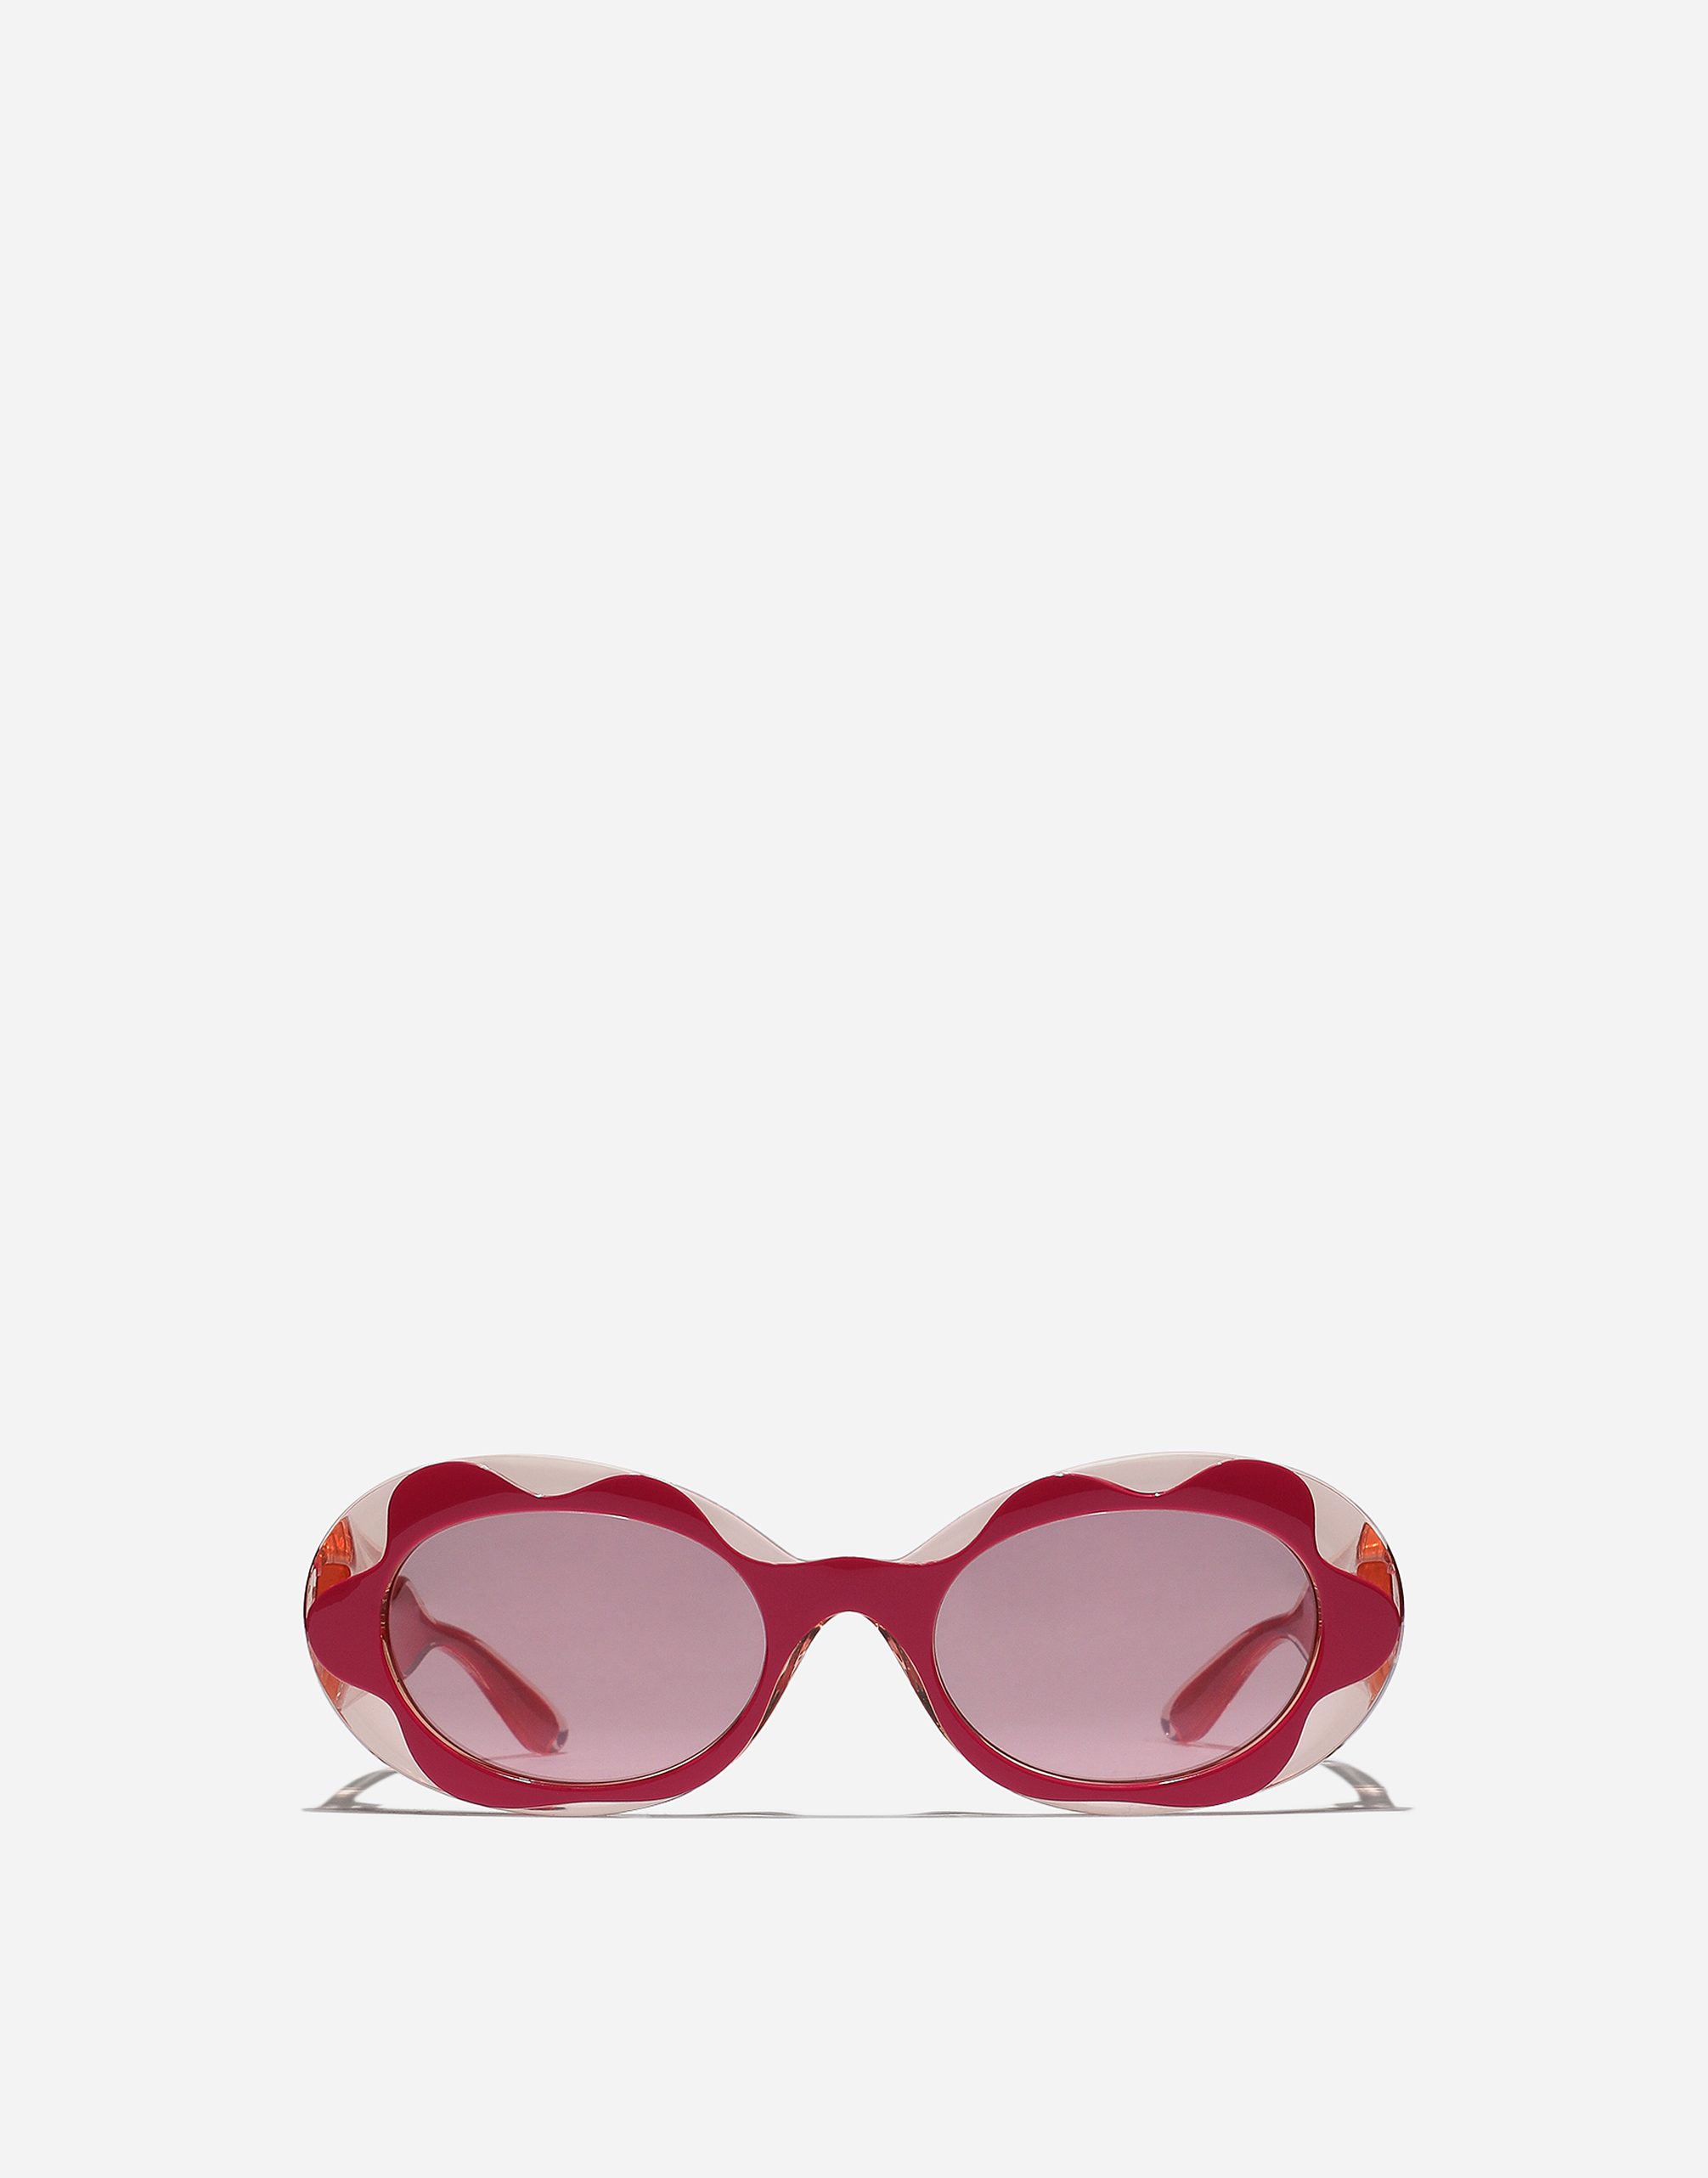 Dolce & Gabbana Occhiale Sole-202401 In Red